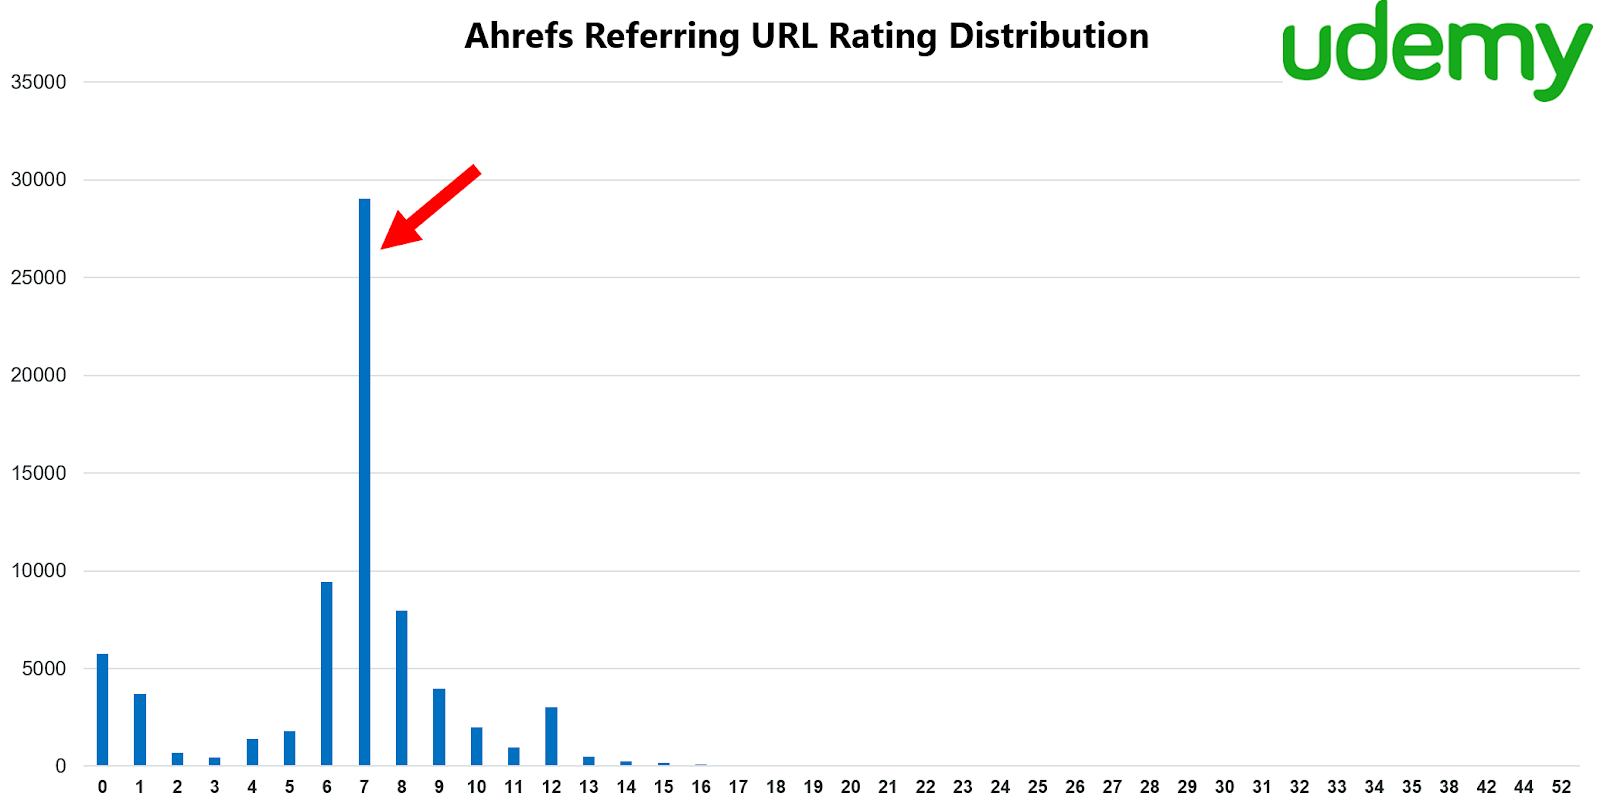 Ahrefs Referring URL Rating Distribution - Udemy